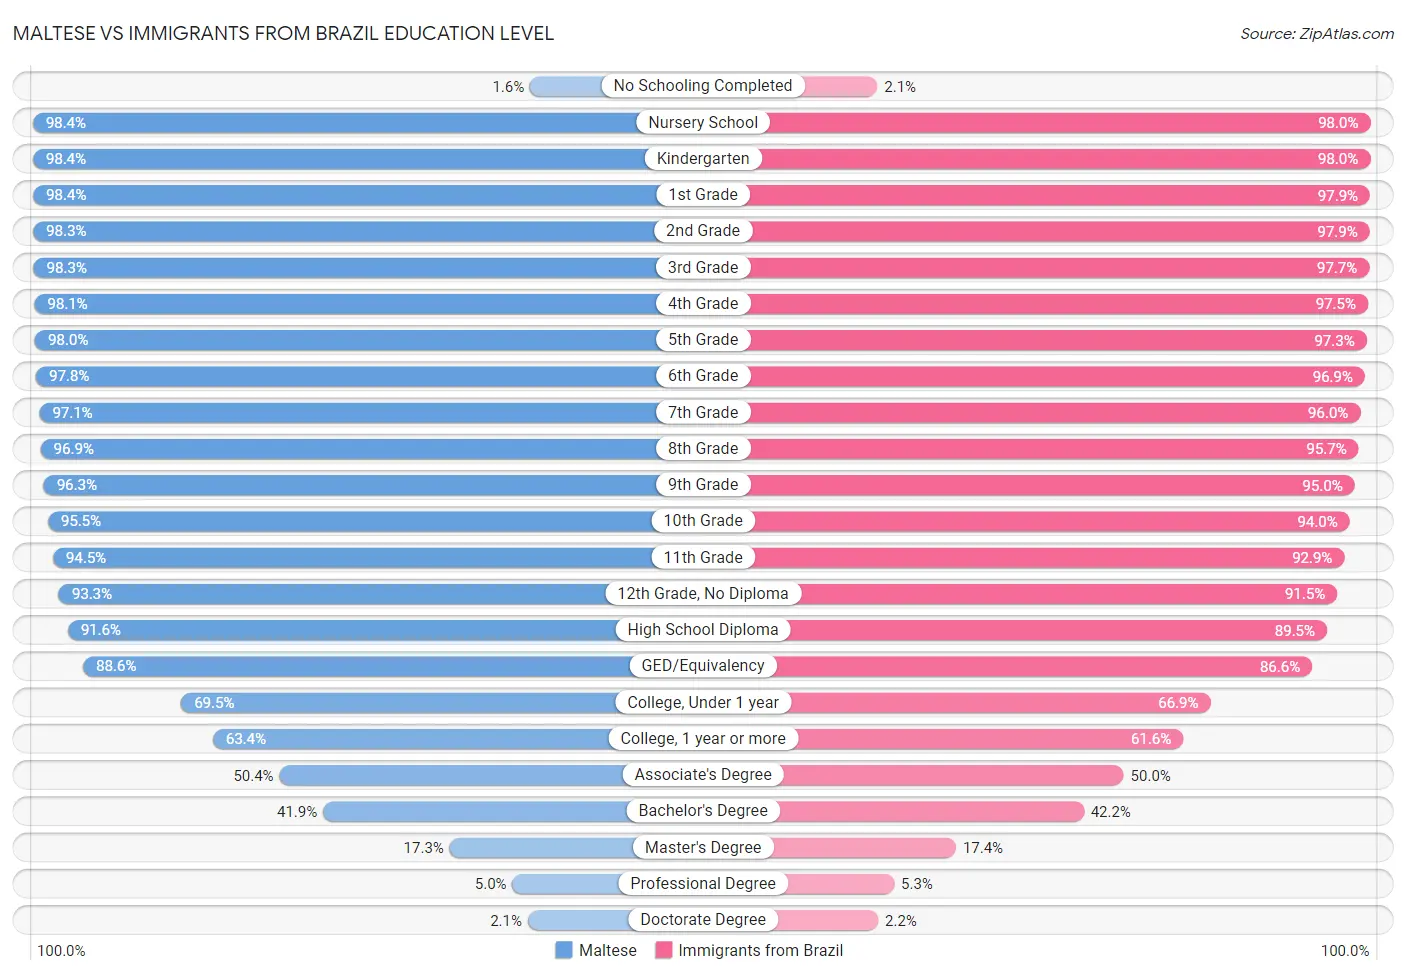 Maltese vs Immigrants from Brazil Education Level